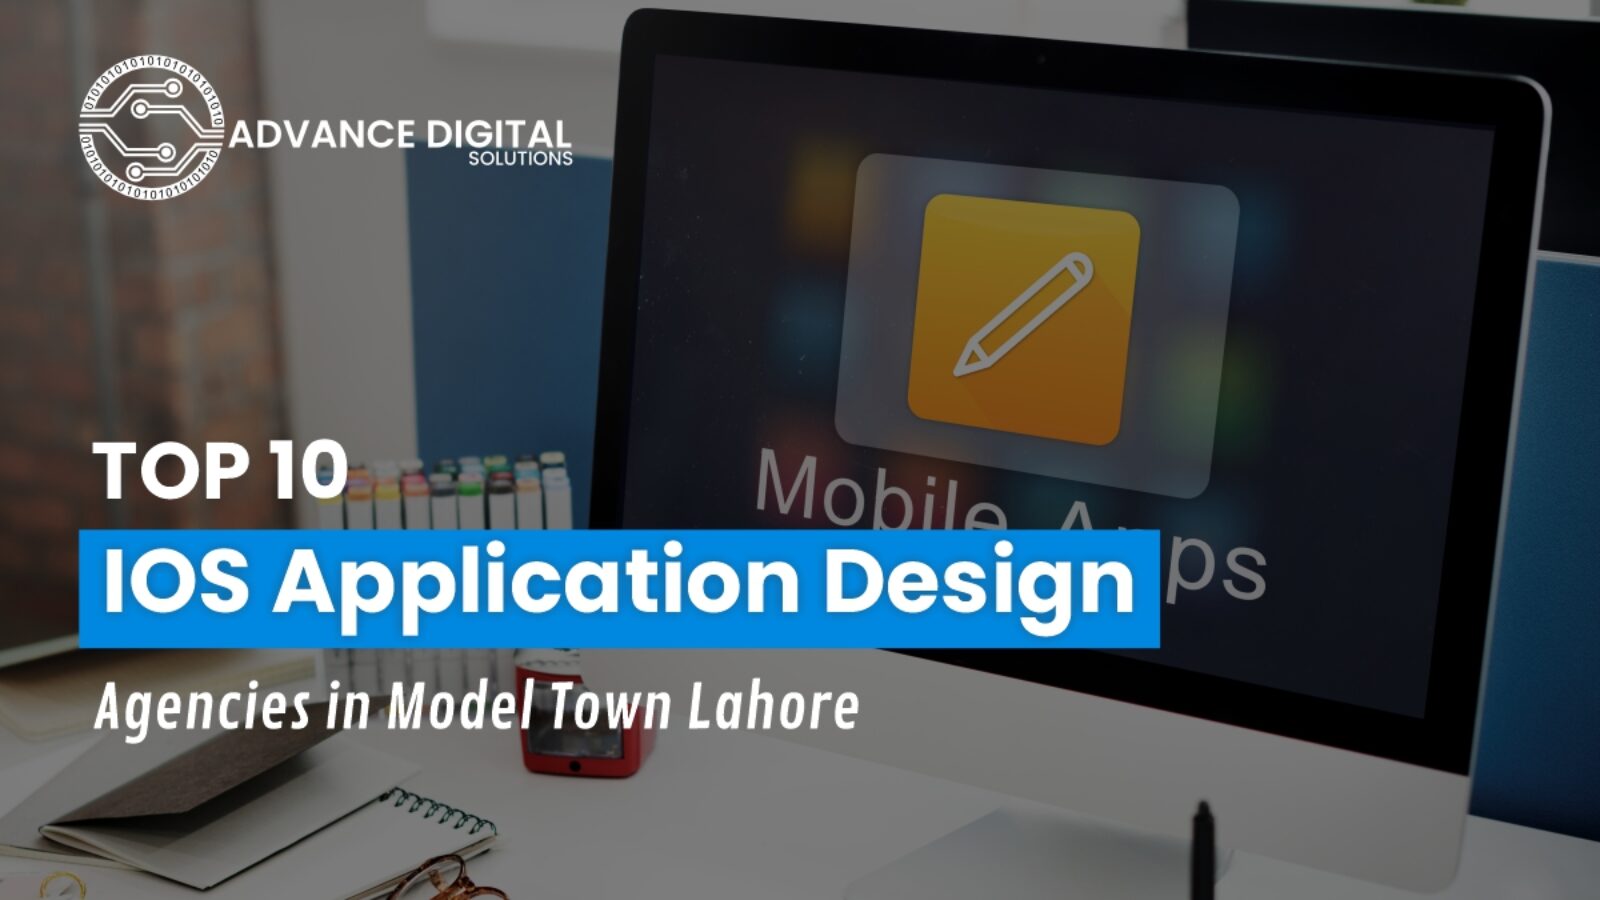 Top 10 IOS Application Design Agencies in Model Town Lahore